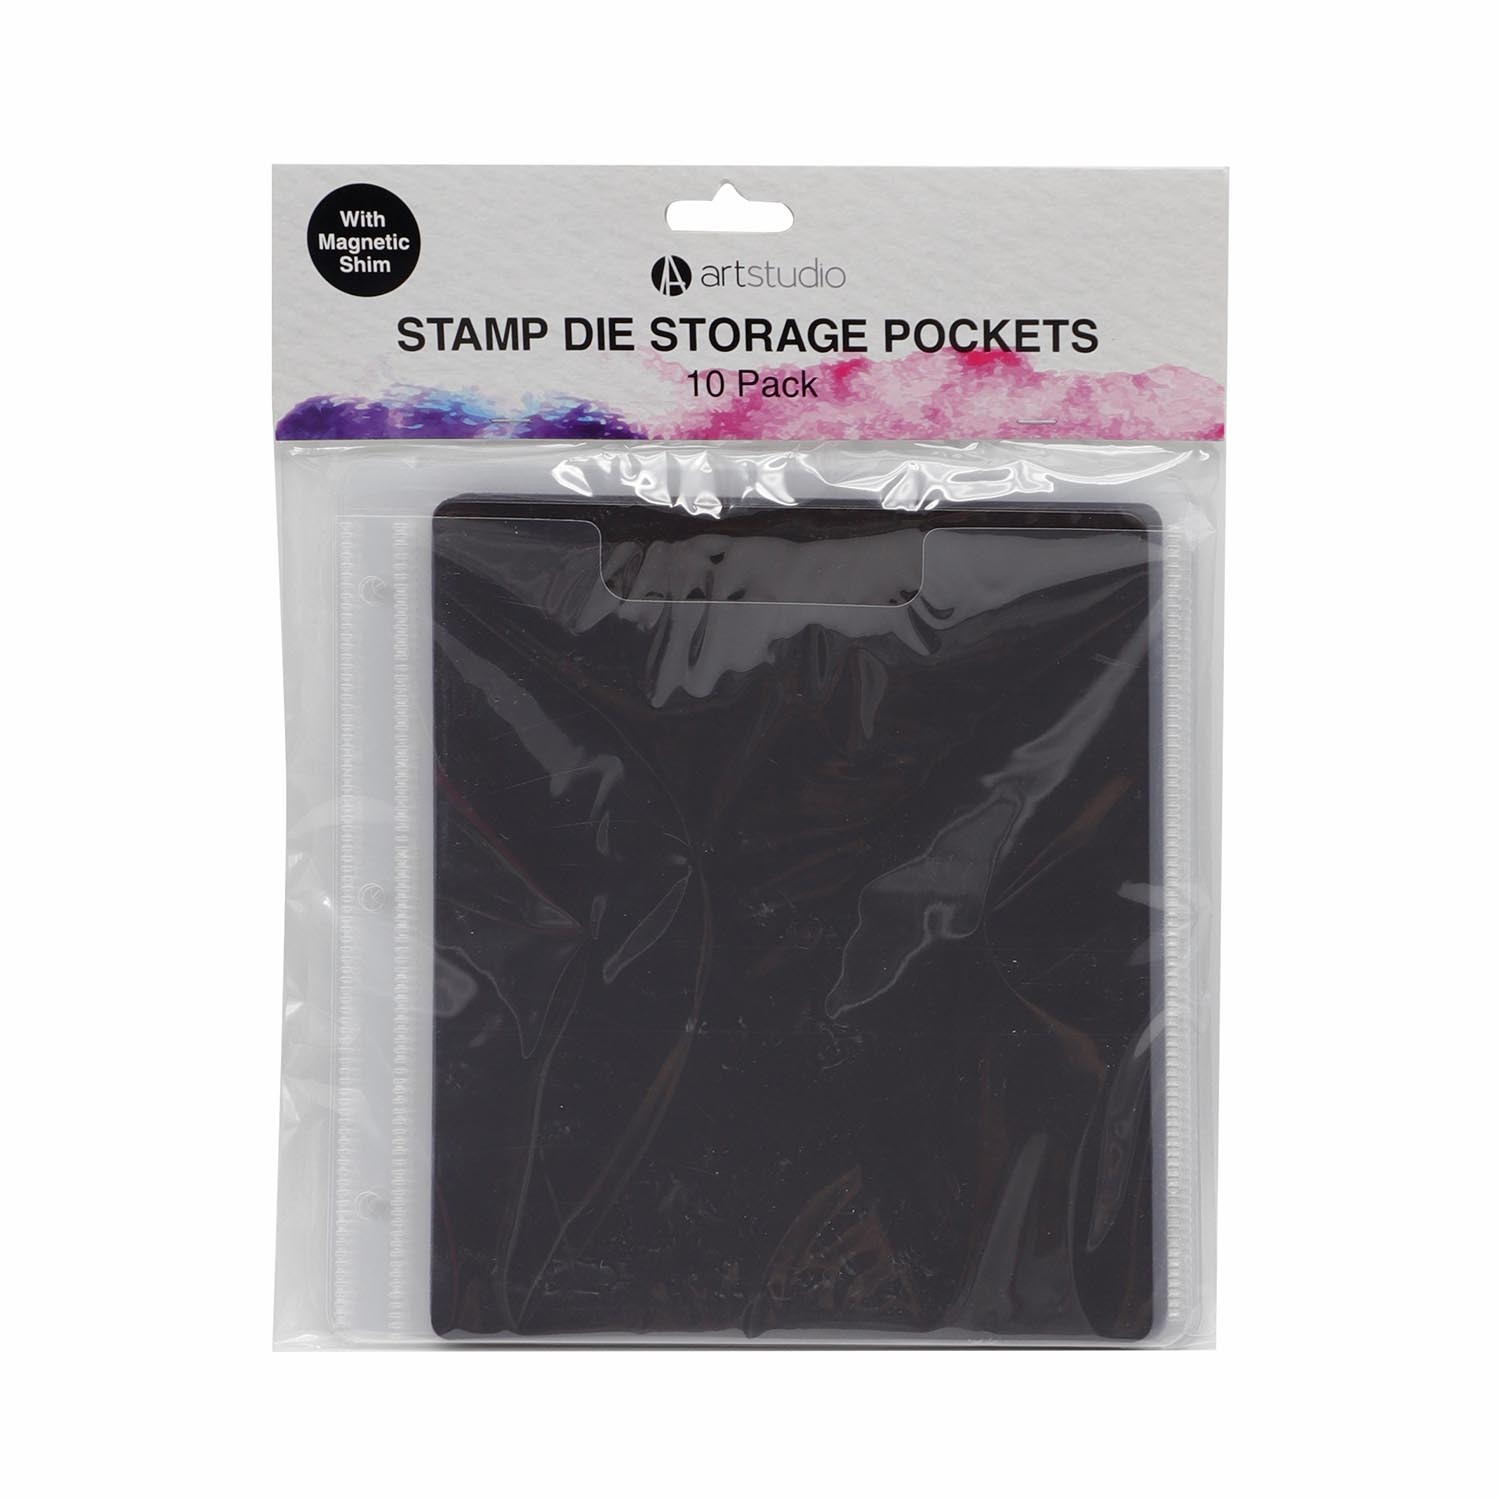 Art Studio Stamp Die Storage Pockets 10 Pack Image